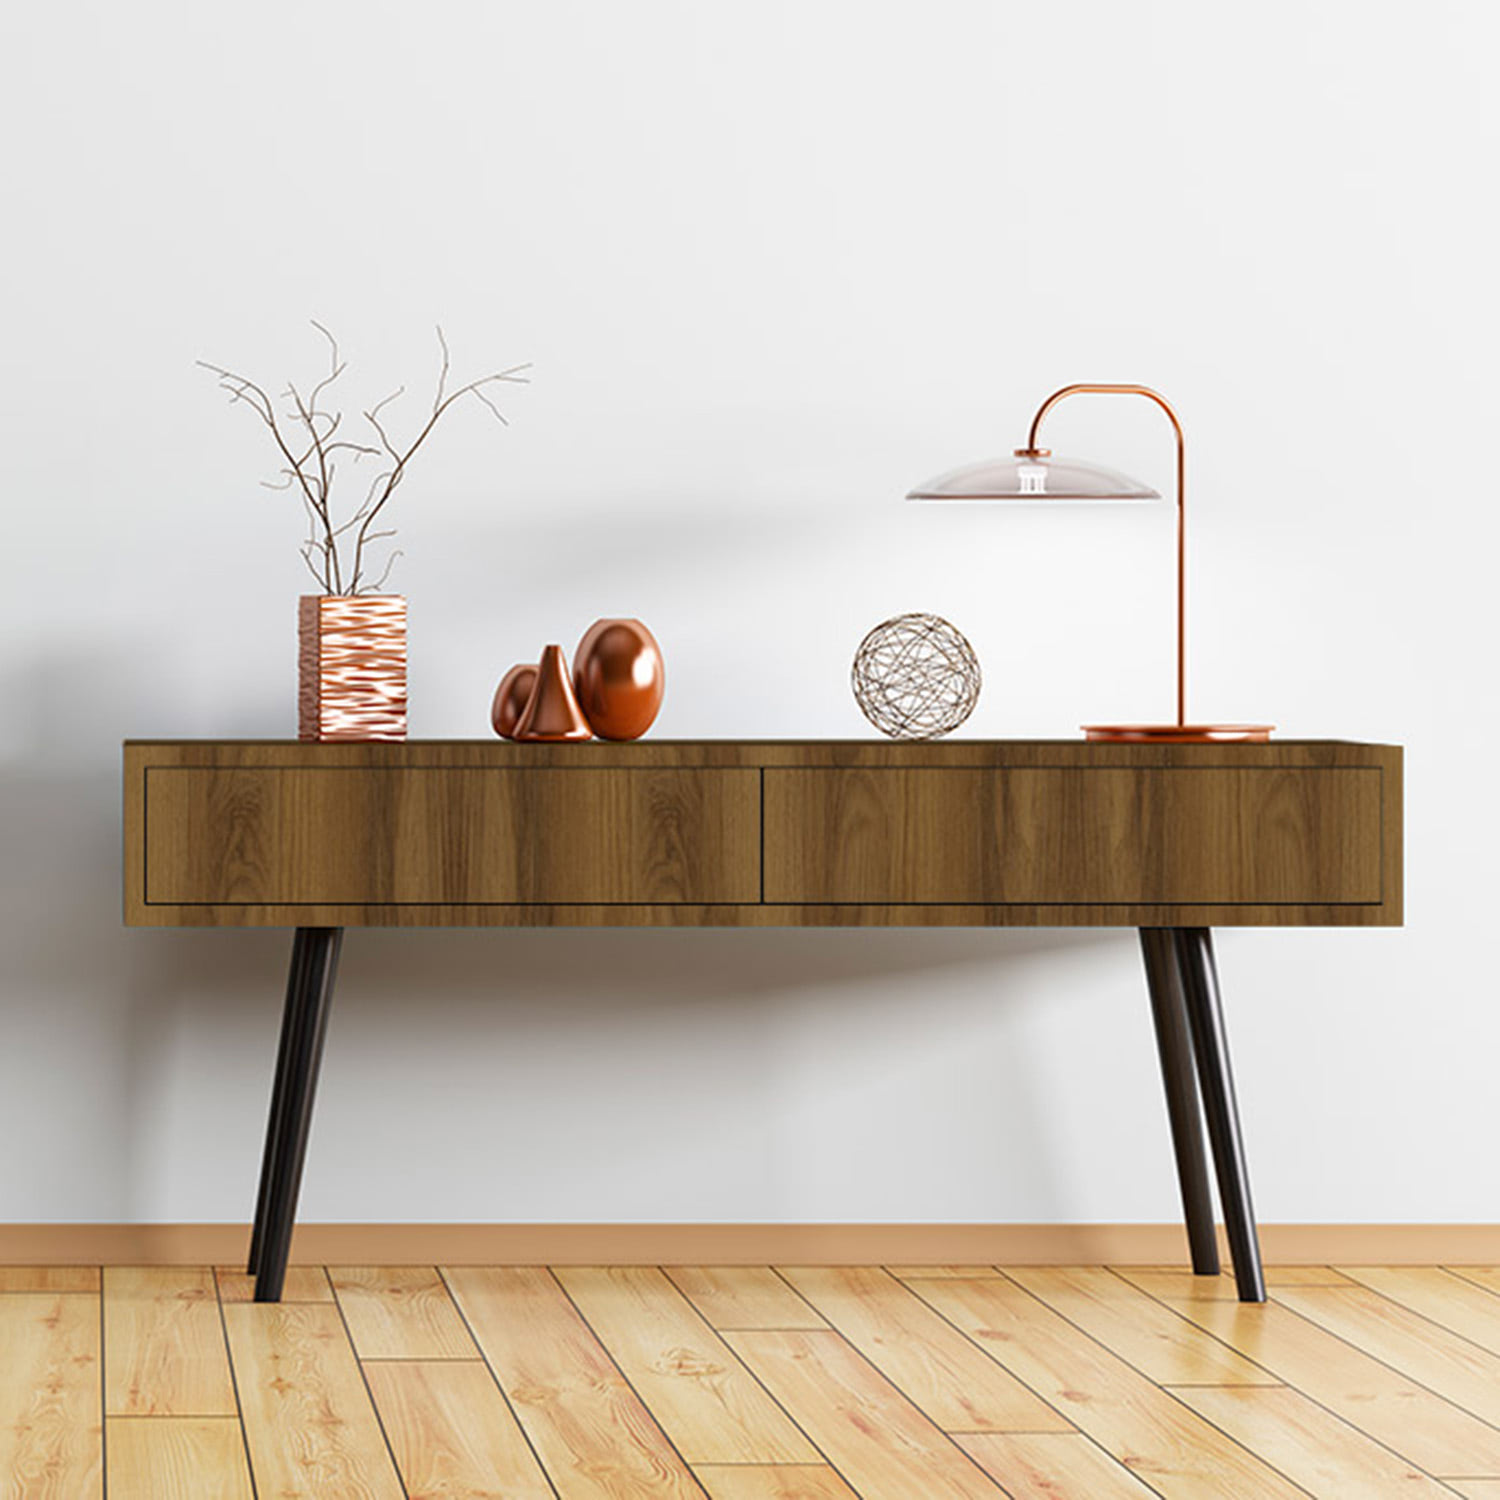 adhesif-decoratif-bois-marron-renovation-meubles-mur-1